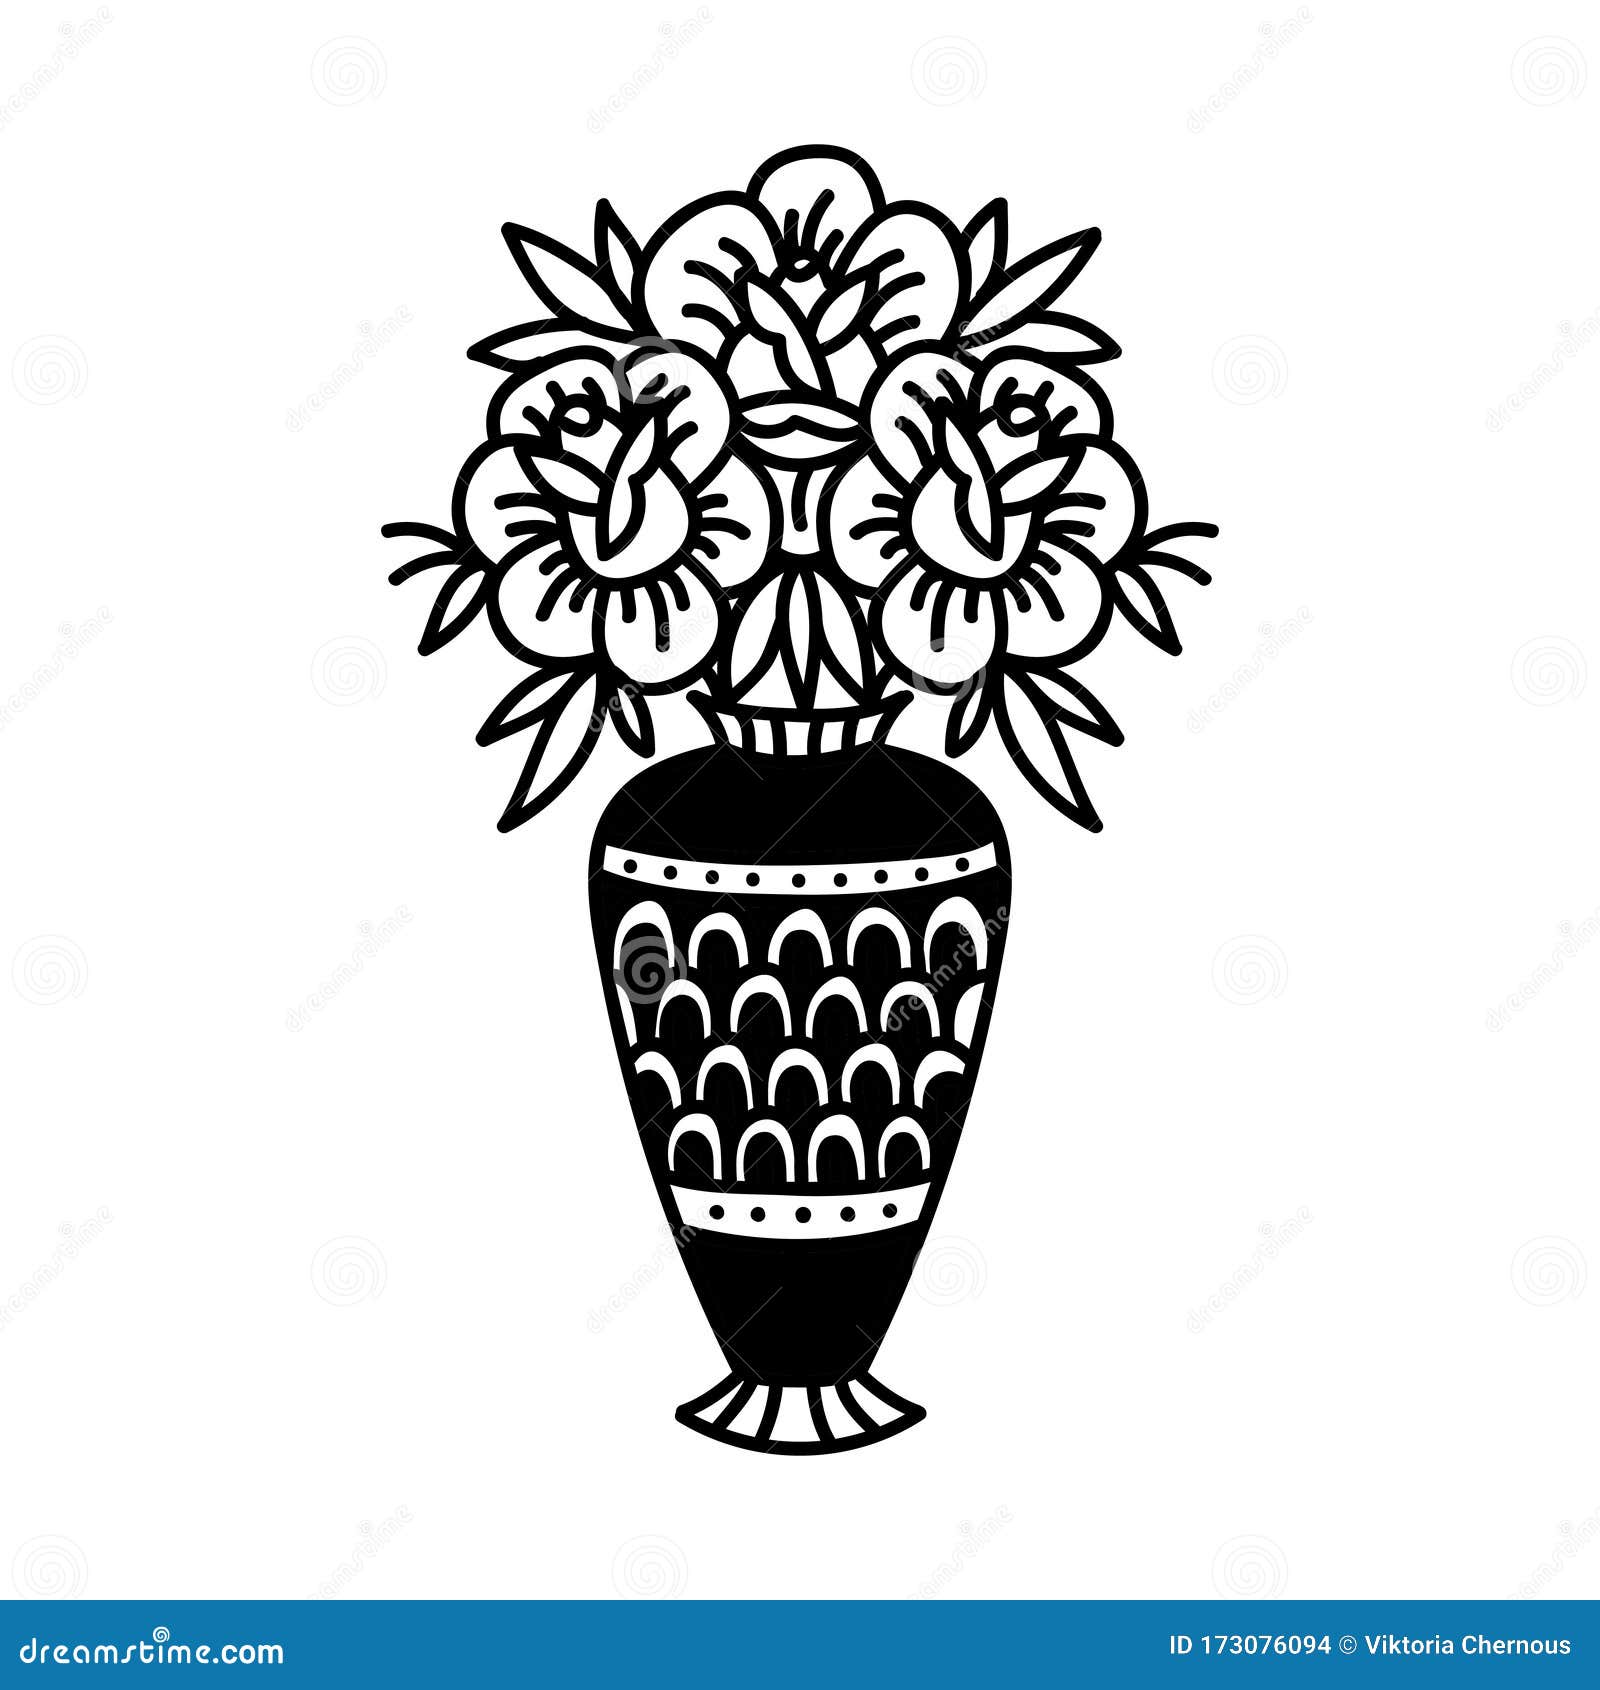 American traditional flower vase tattoo